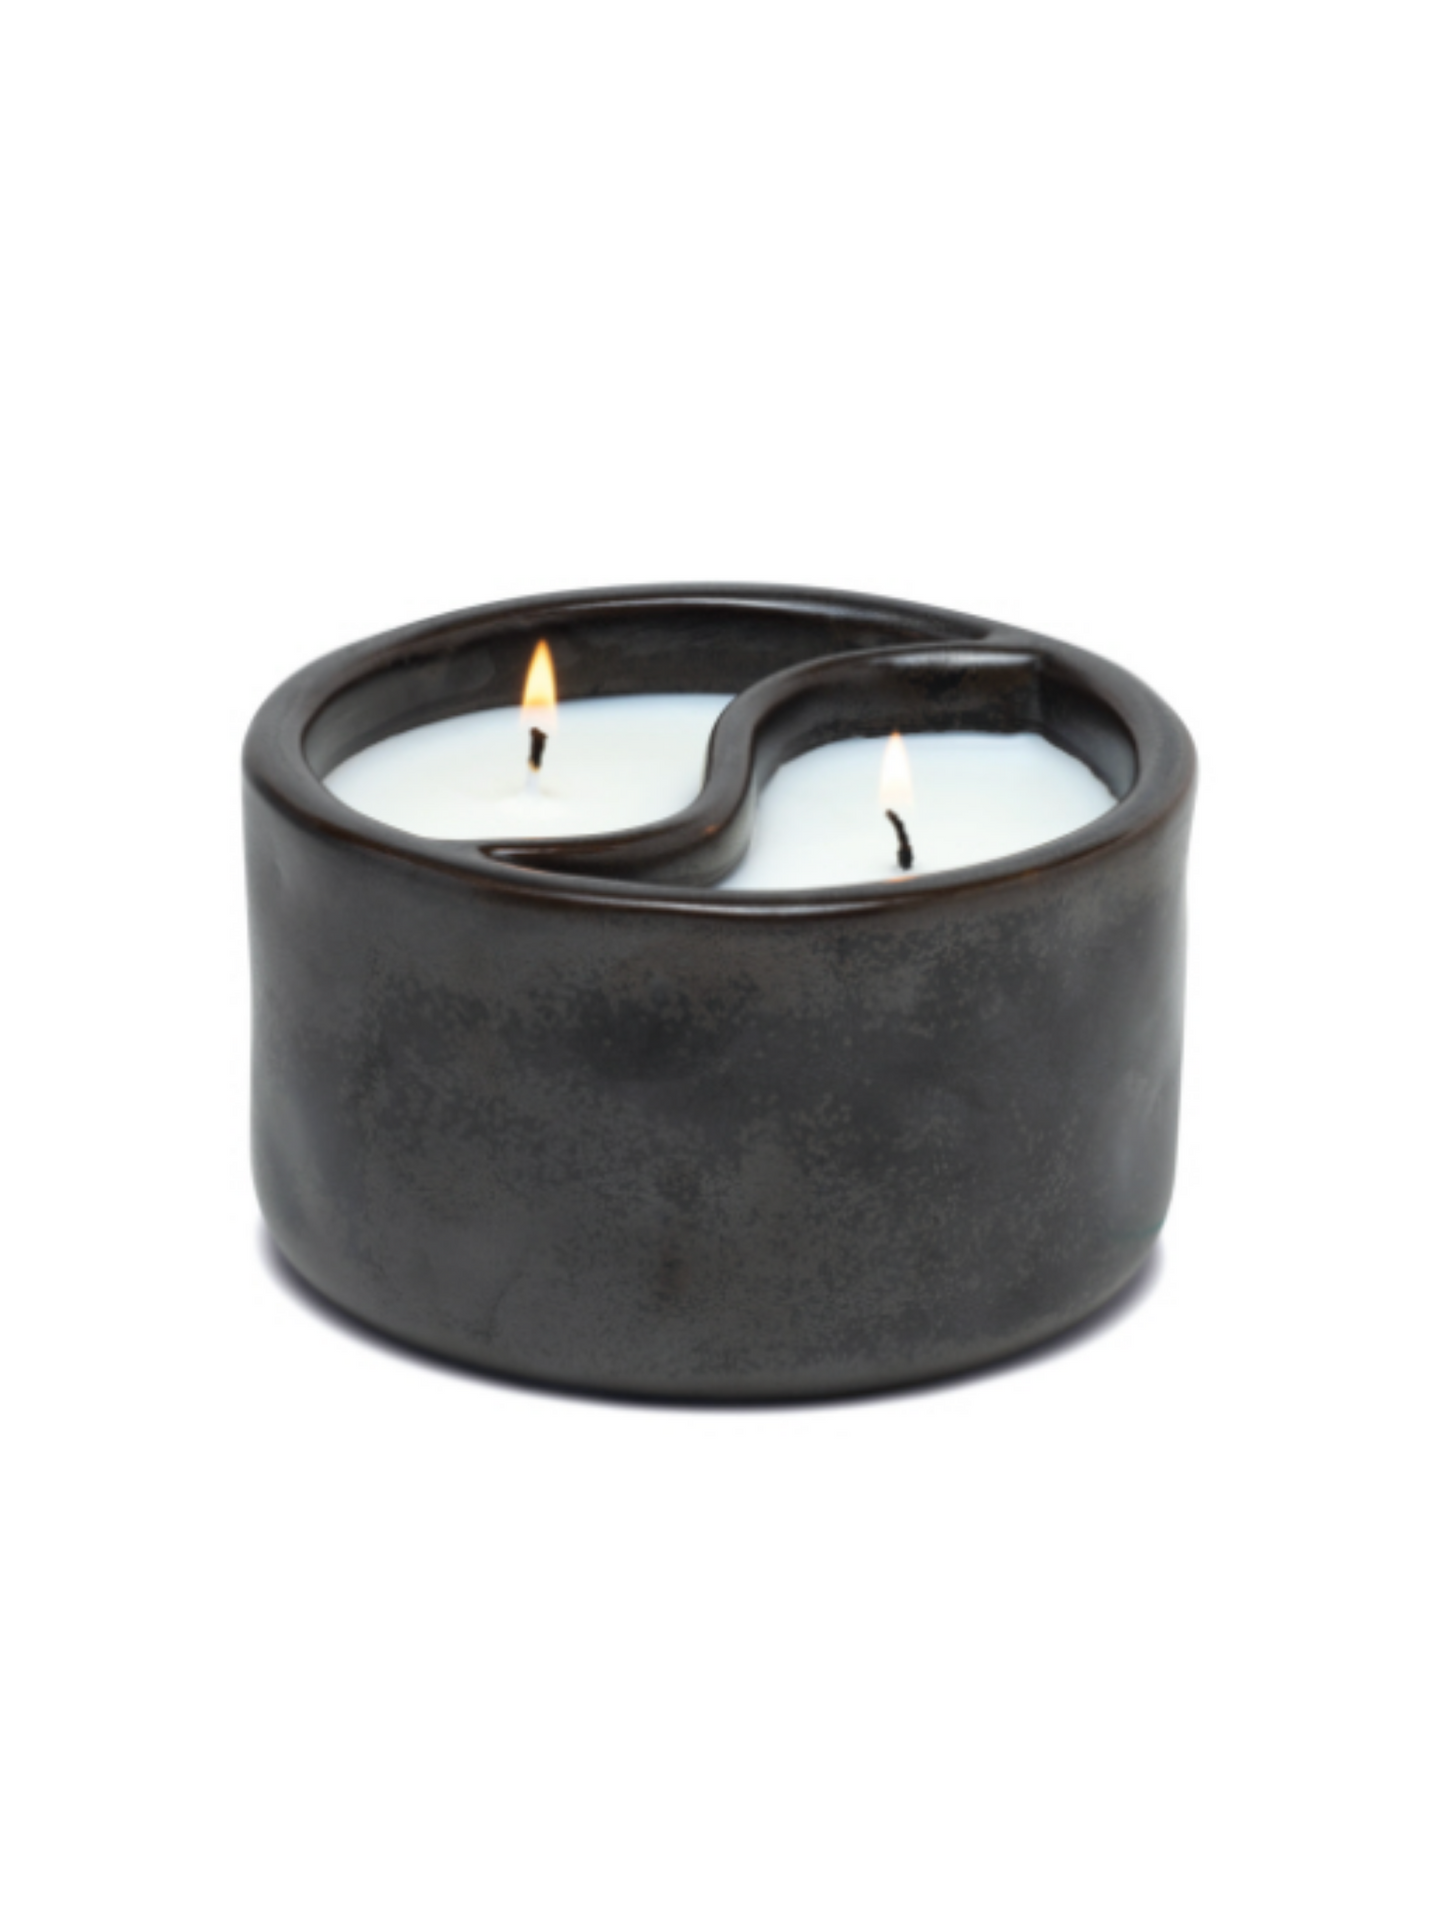 Ying Yang 11oz Black Ceramic Candle